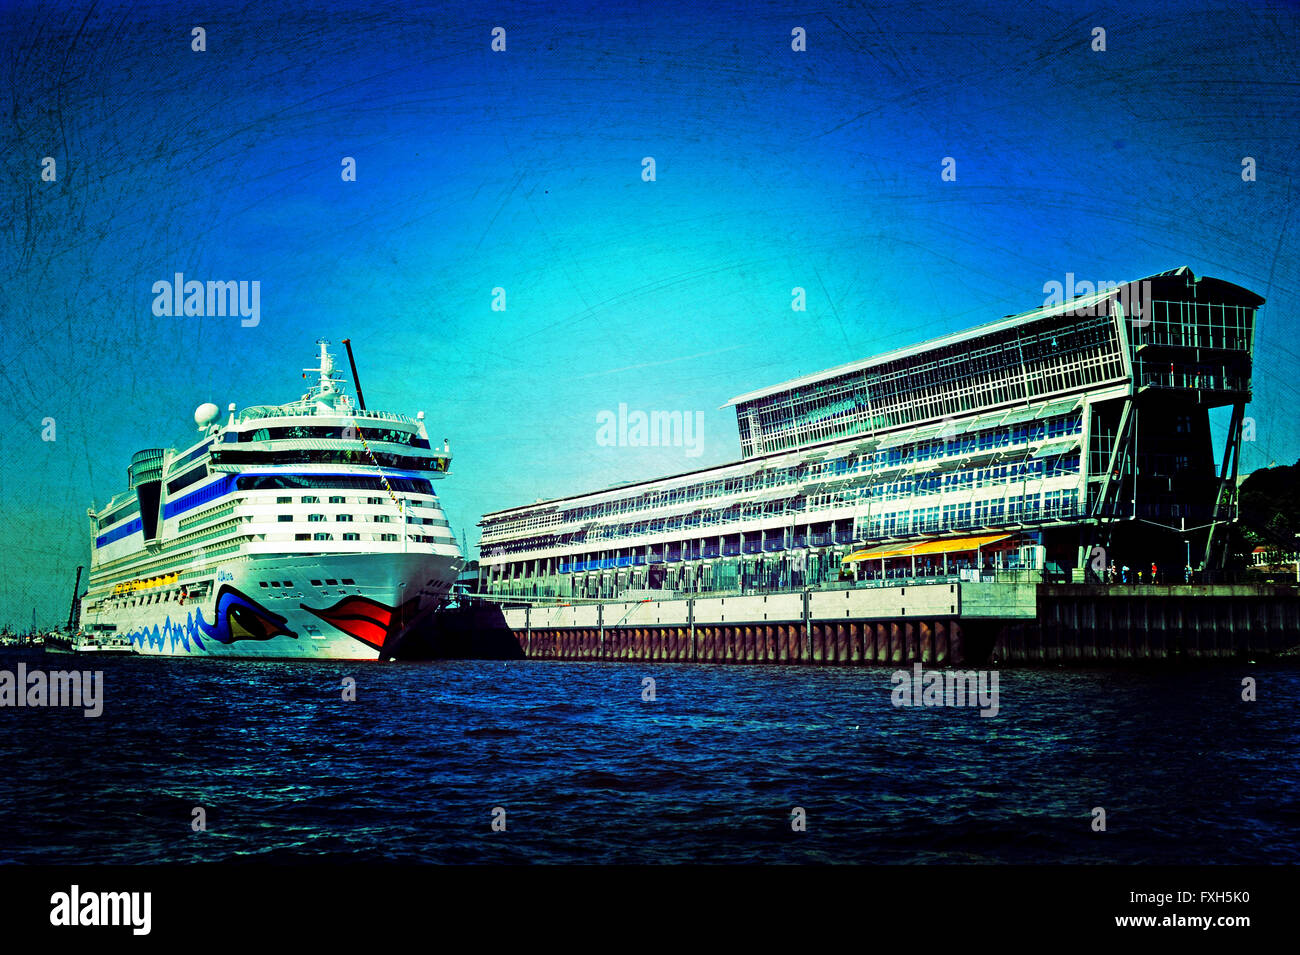 Cruise Ship AIDA in Hamburg, Germany. Stock Photo